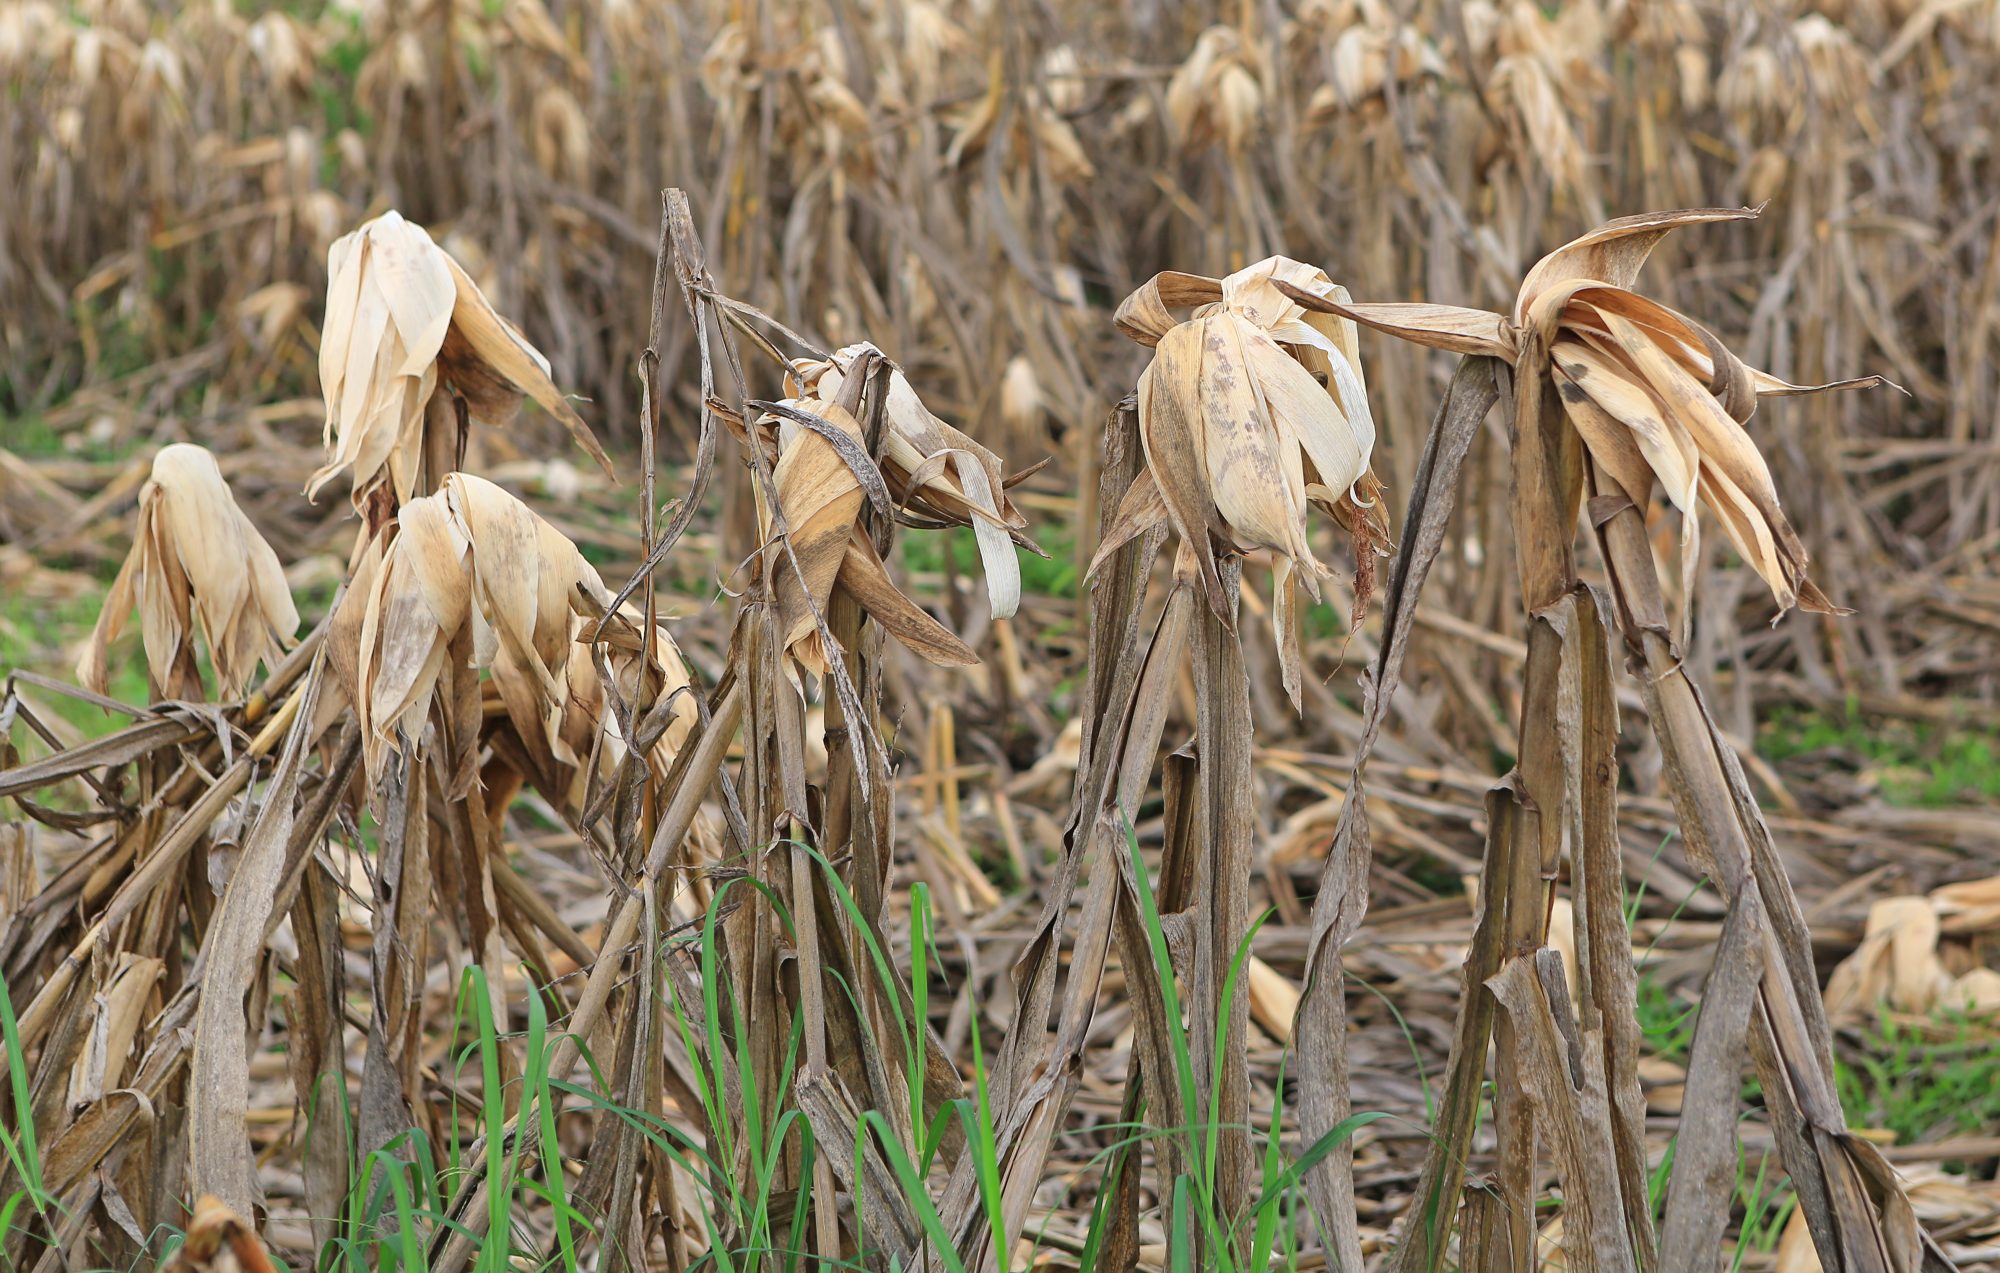 Dried corn stalks in the fall season.